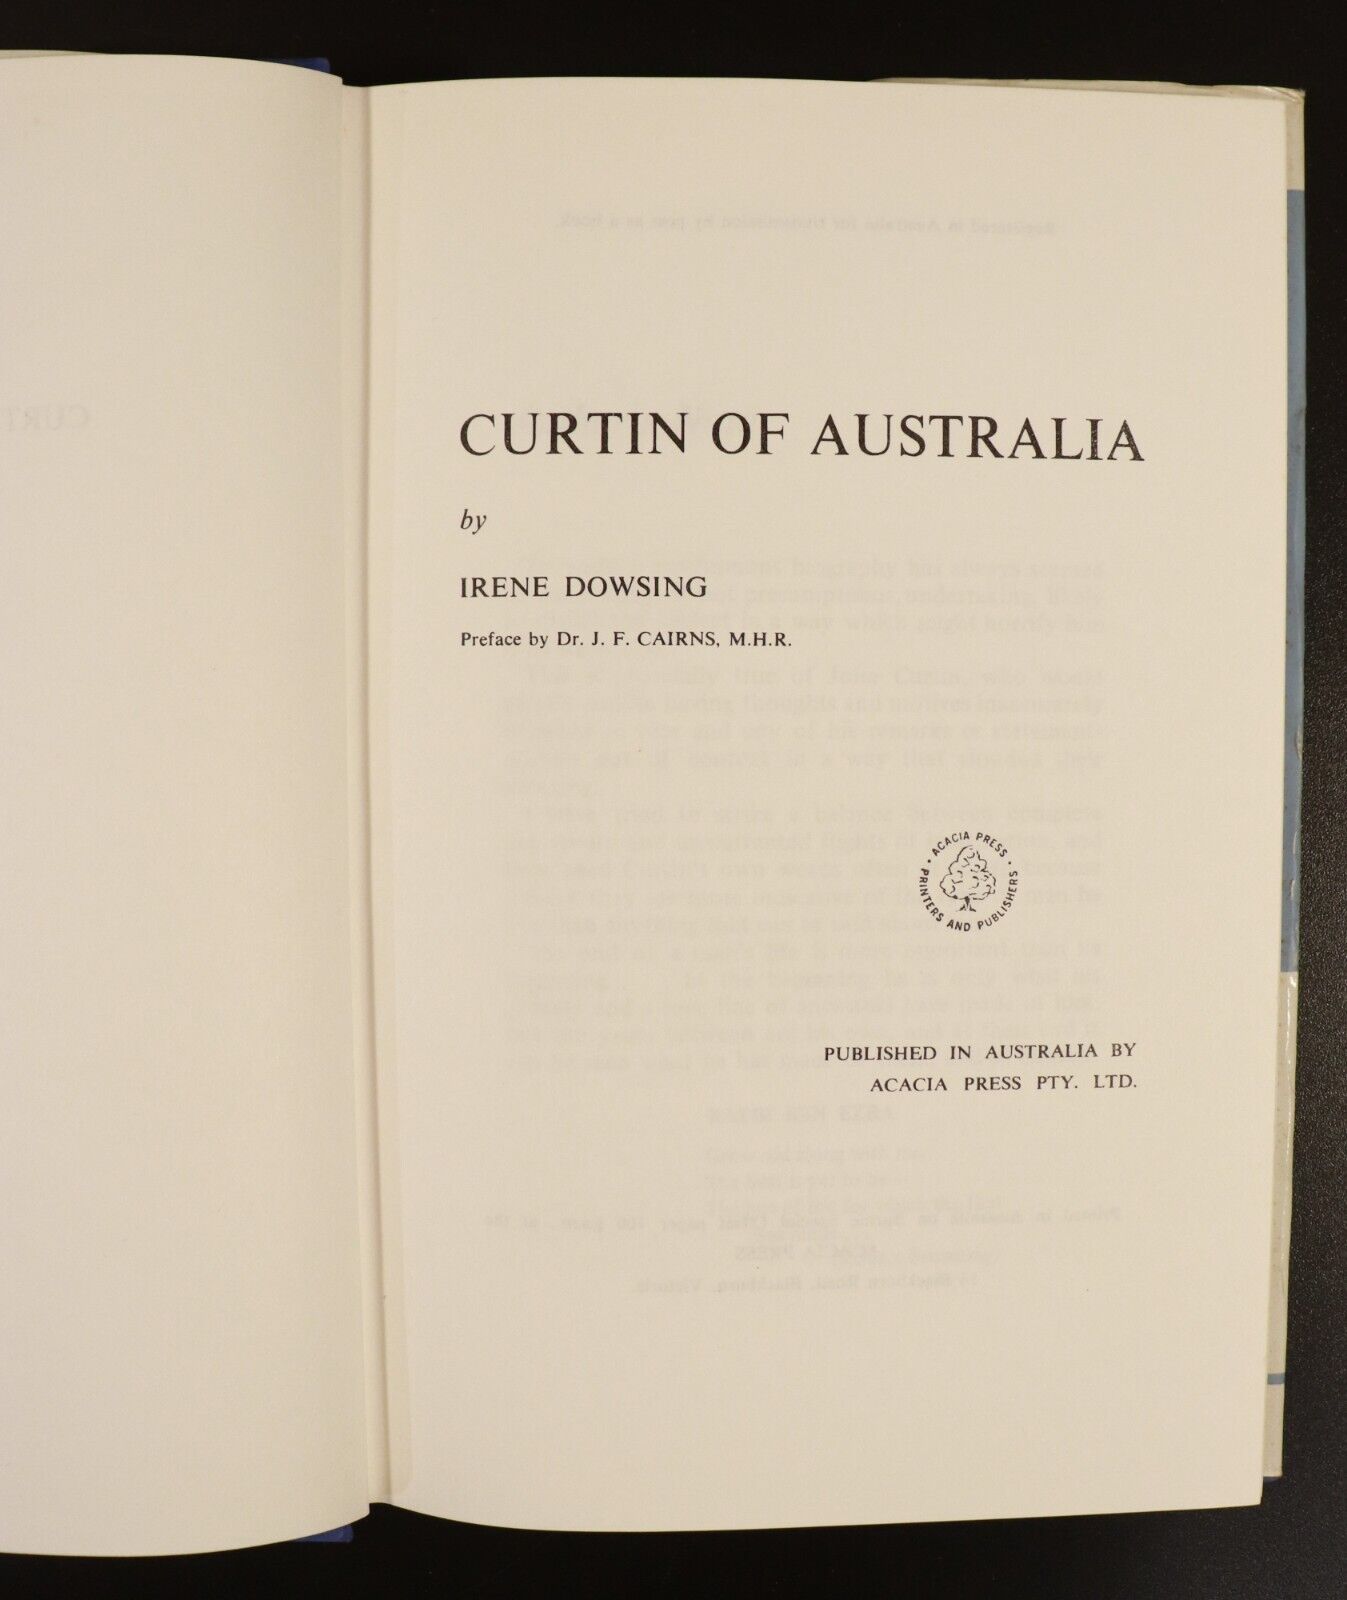 1968 Curtin Of Australia by Irene Dowsing Australian History Book 1st Edition - 0